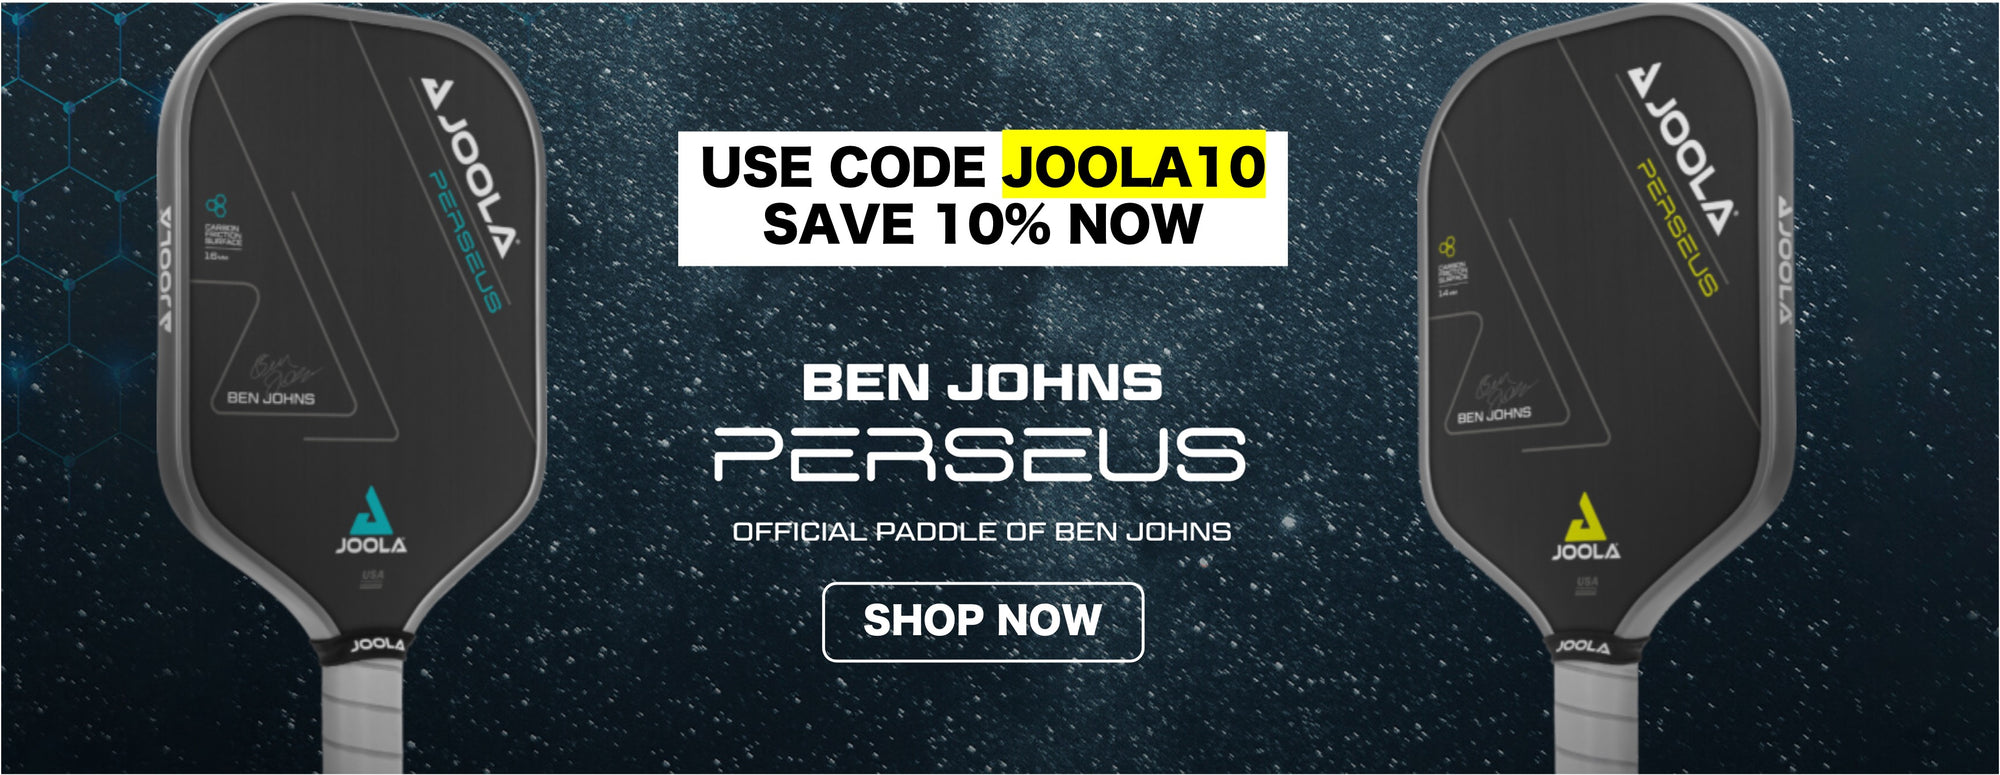 Joola pickleball -save 10% using code joola10